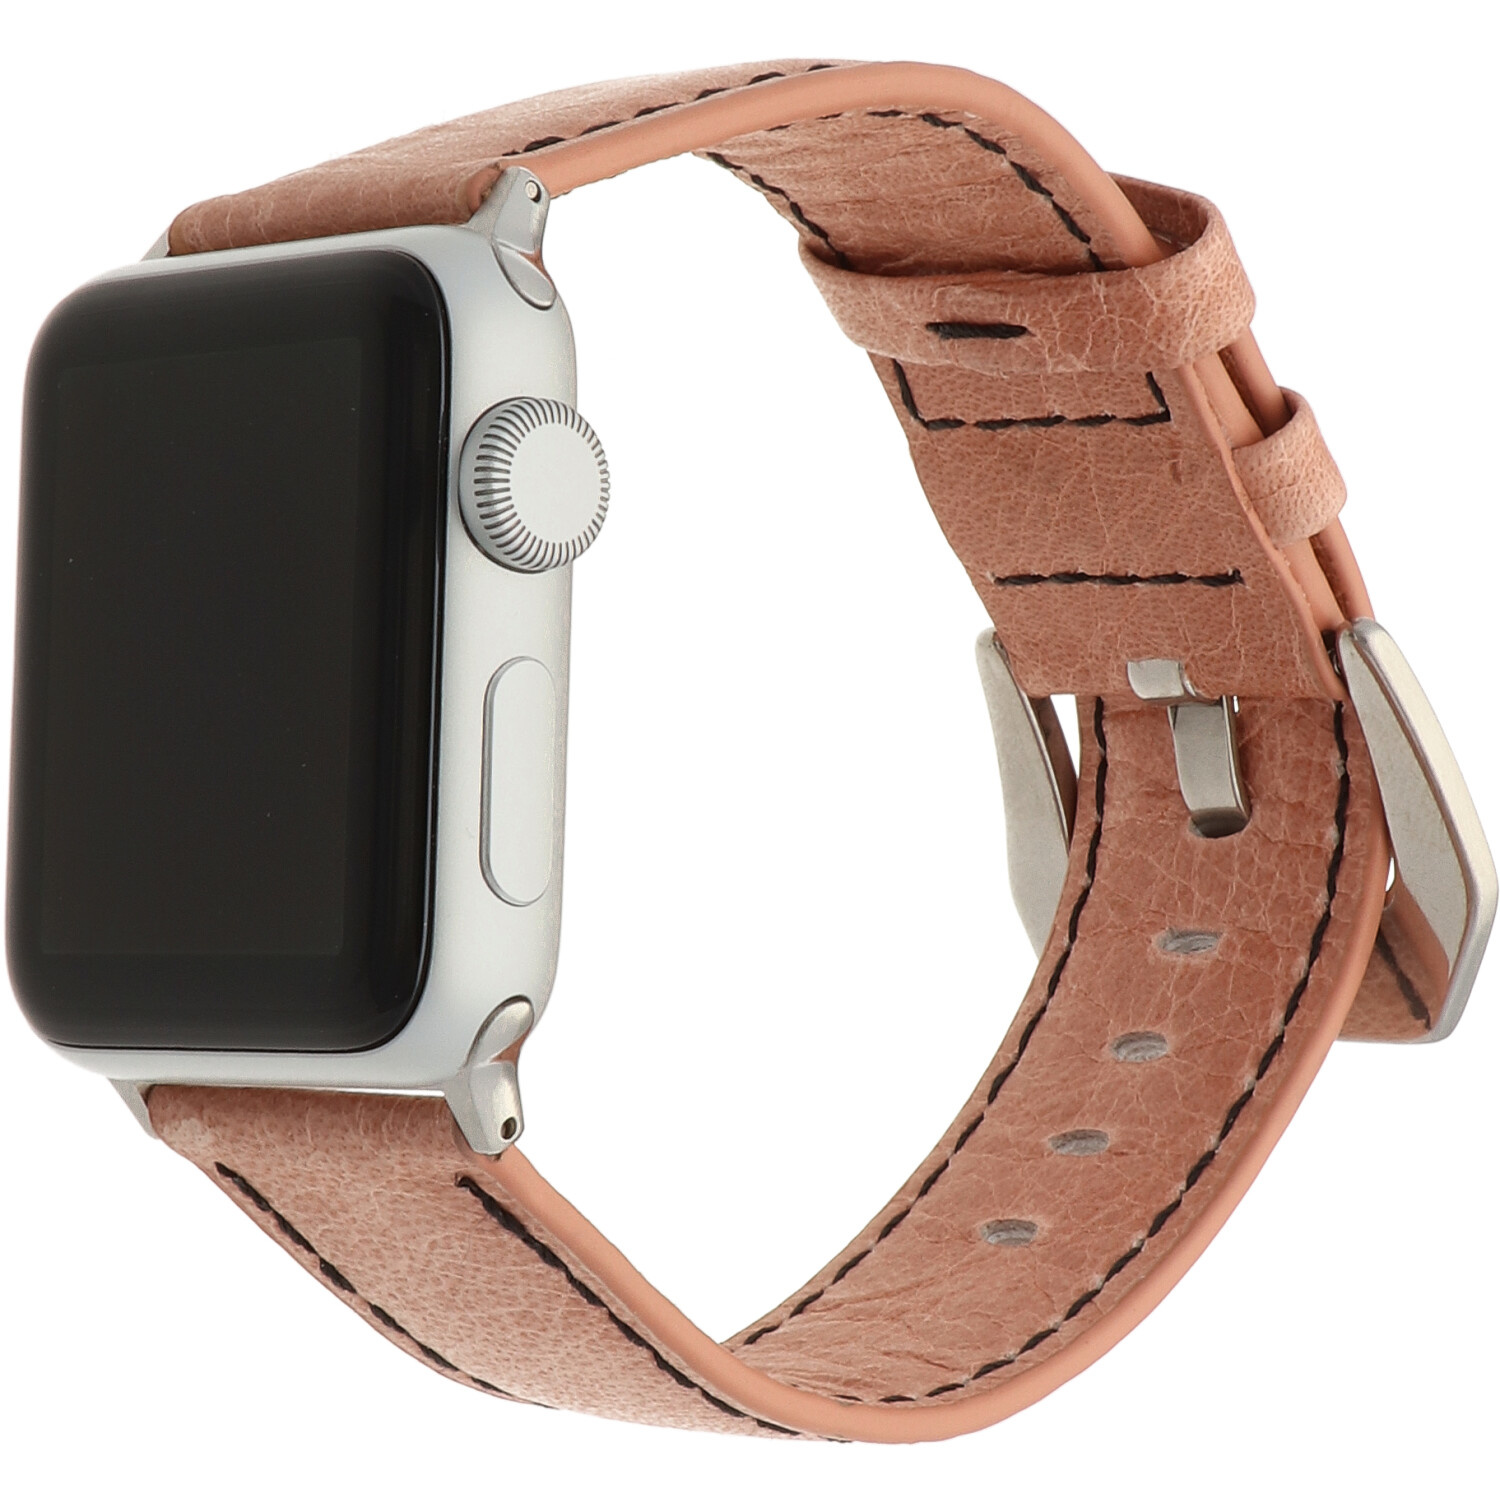 Bracelet en cuir rétro Apple Watch - beige